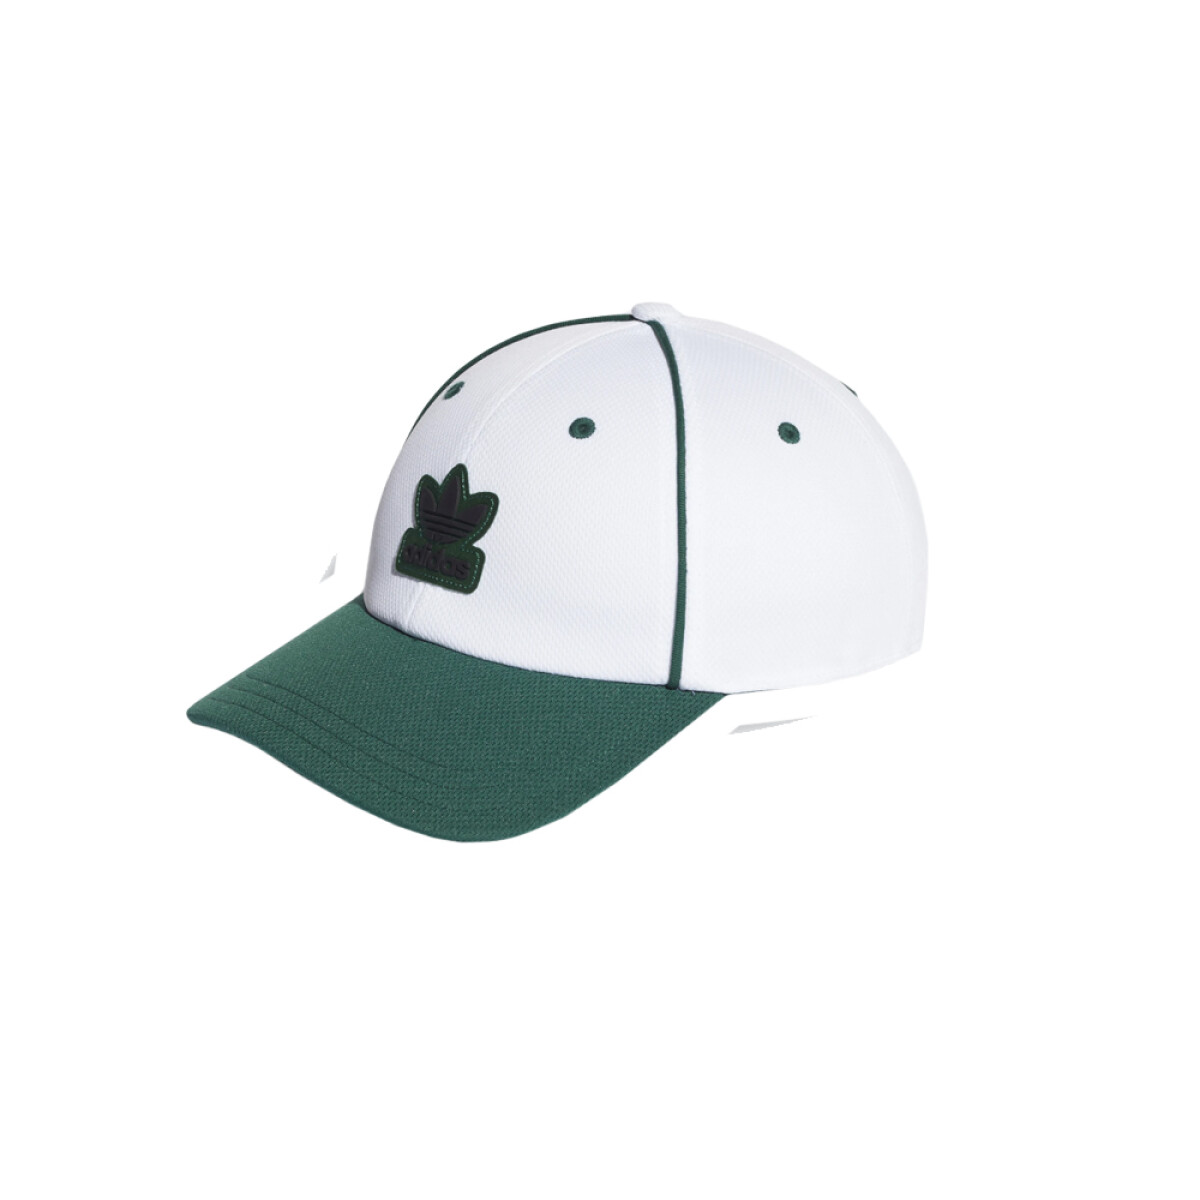 GORRO adidas BAISBALL ADICOLOR - White/Green 